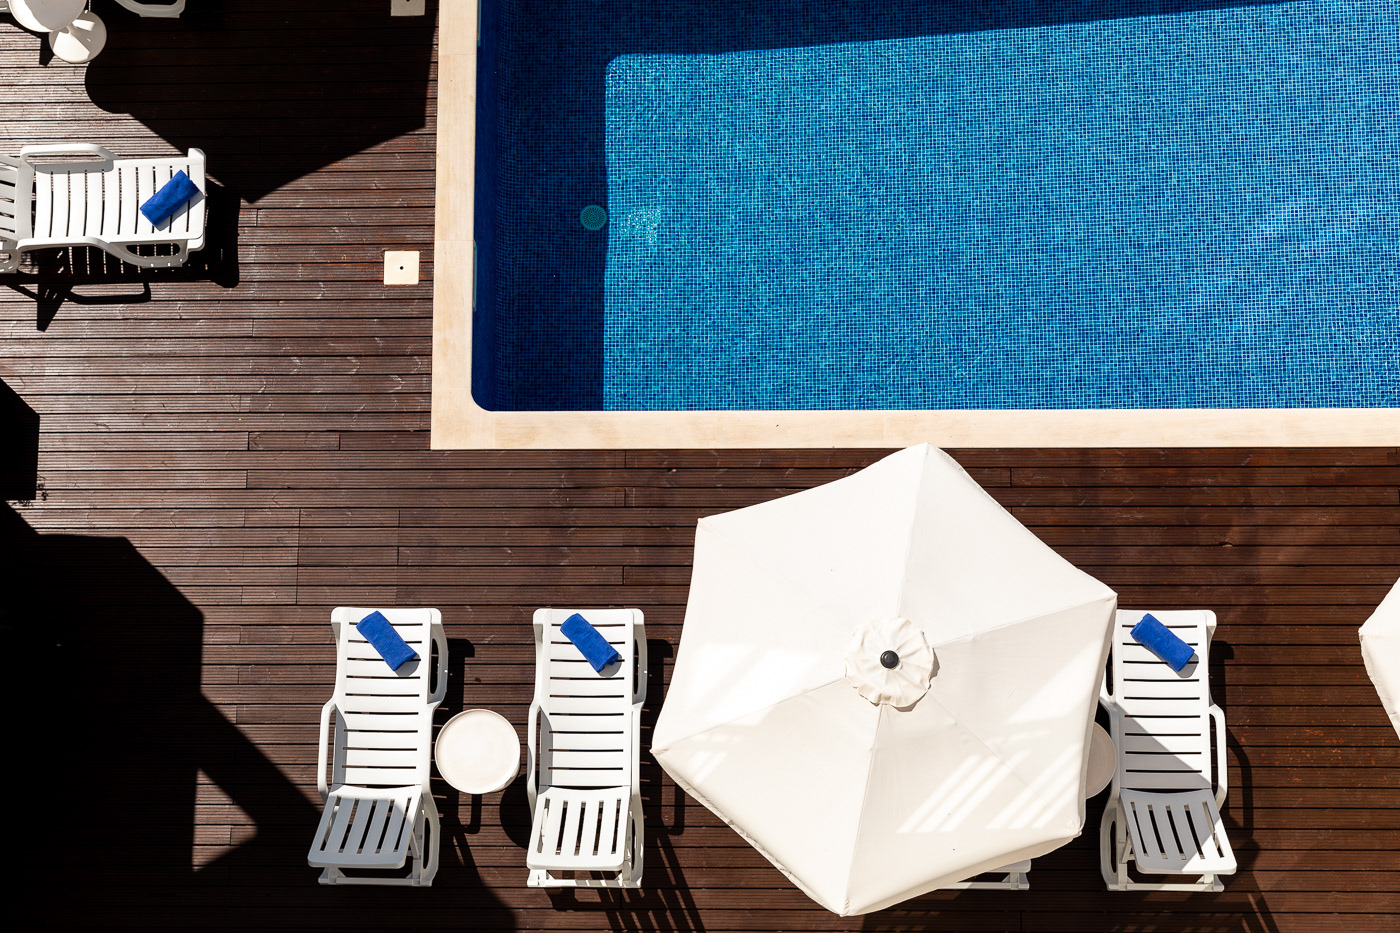 Algarve hotel hotel photography interiors photography